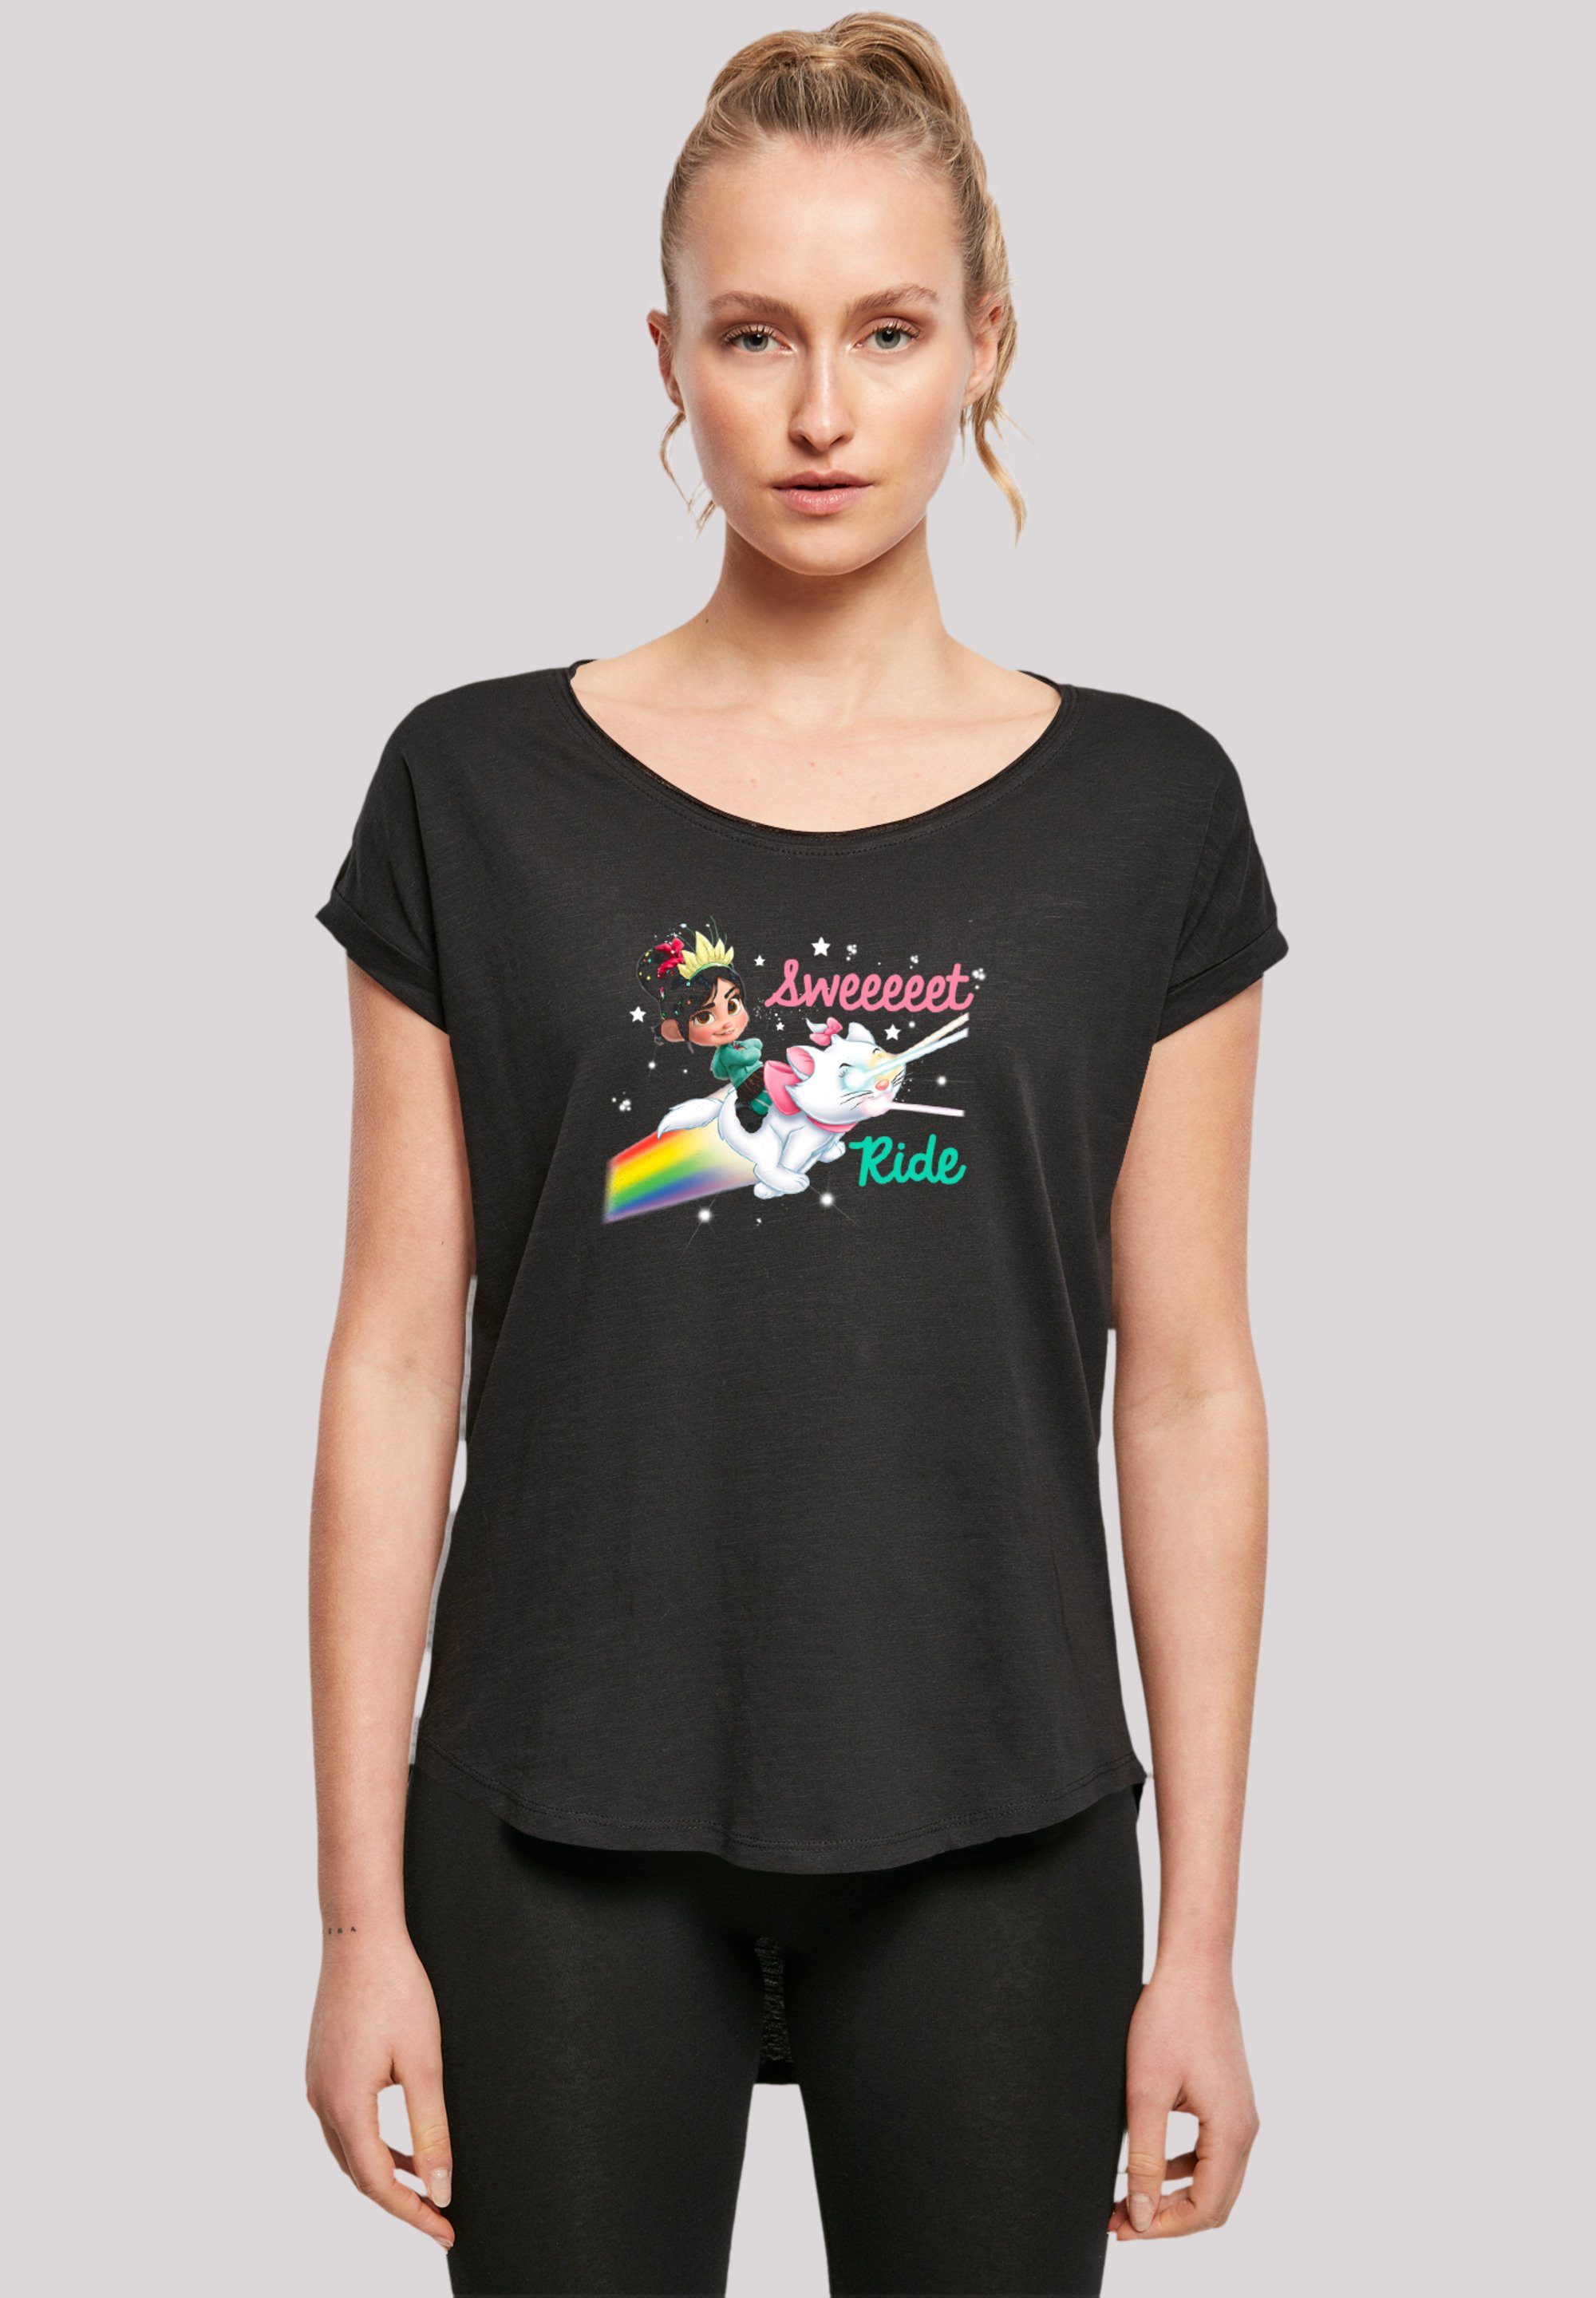 Reichts Wreck-It Sweet T-Shirt Ride F4NT4STIC Ralph Qualität Premium Disney